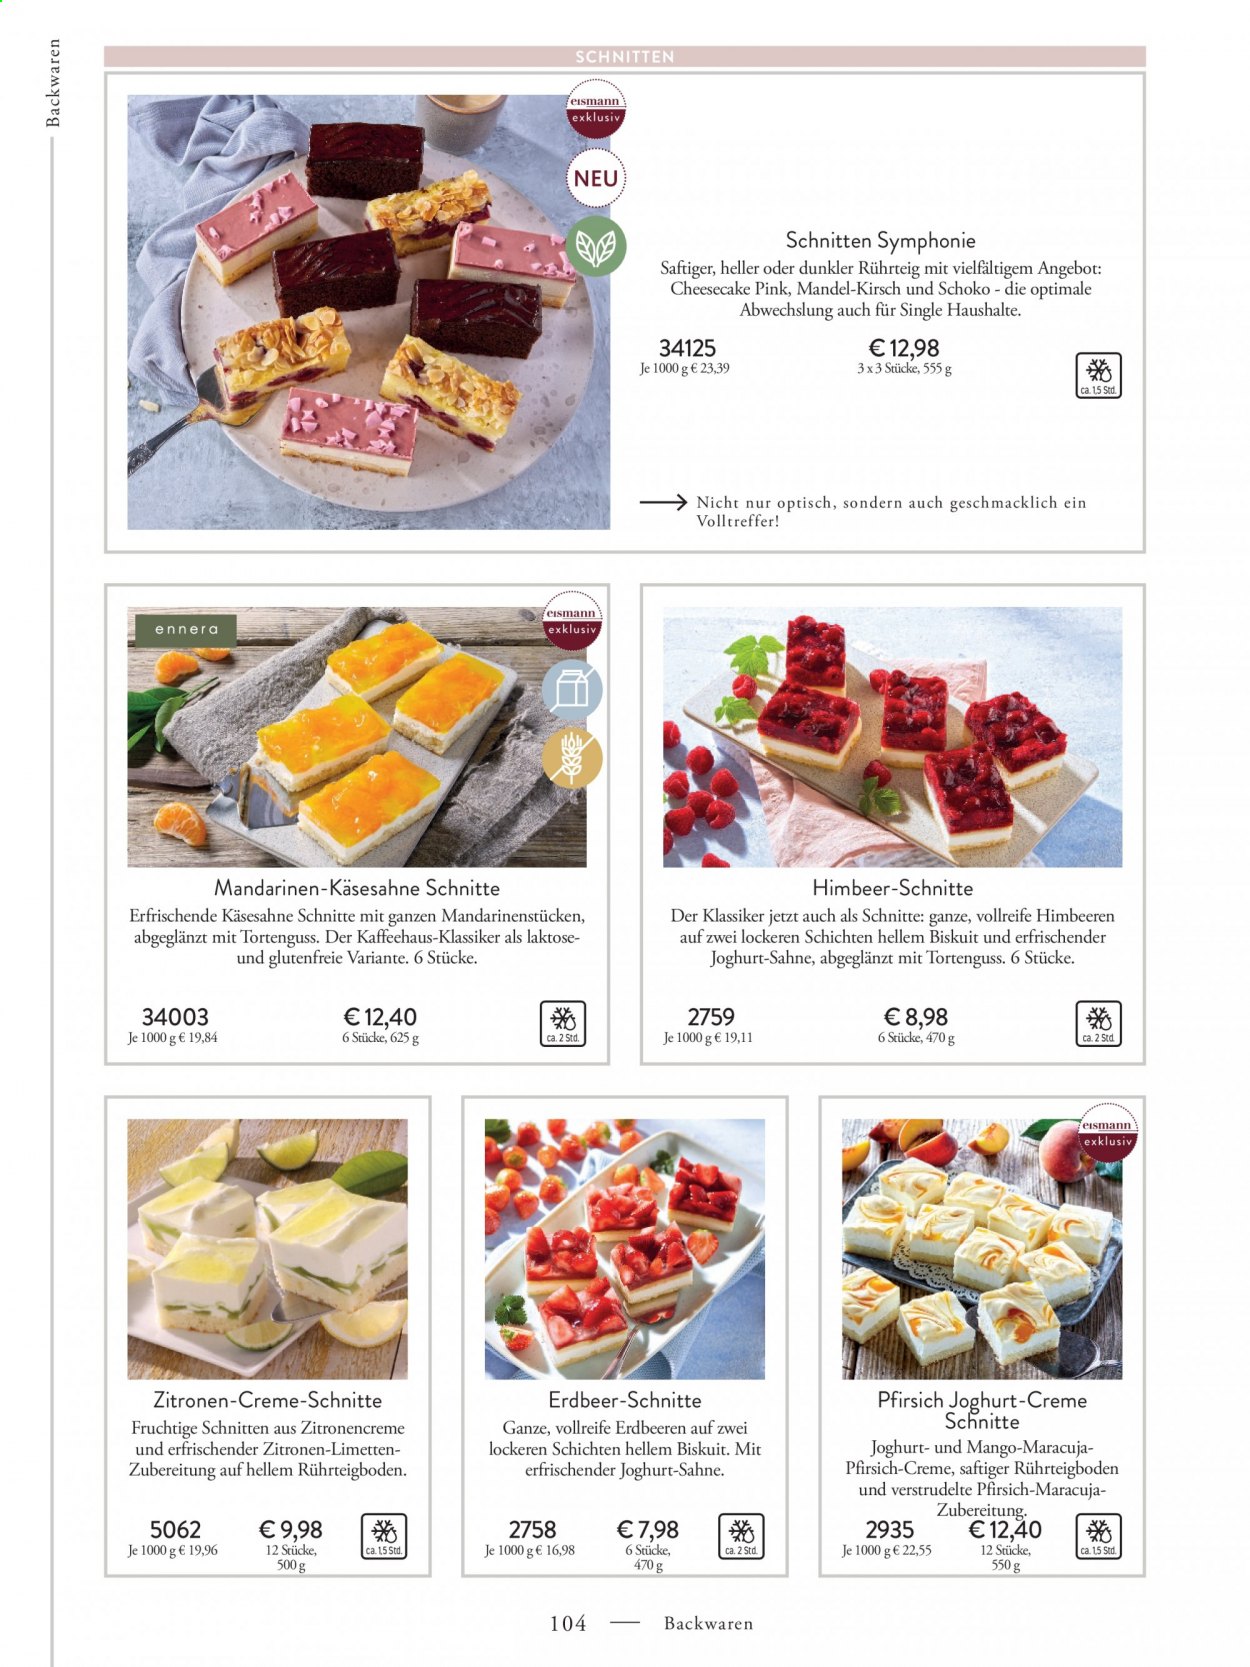 thumbnail - Prospekte eismann - 6.09.2021 - 13.02.2022 - Produkte in Aktion - Backwaren, Cheesecake, Zitronen, Mandarinen. Seite 104.